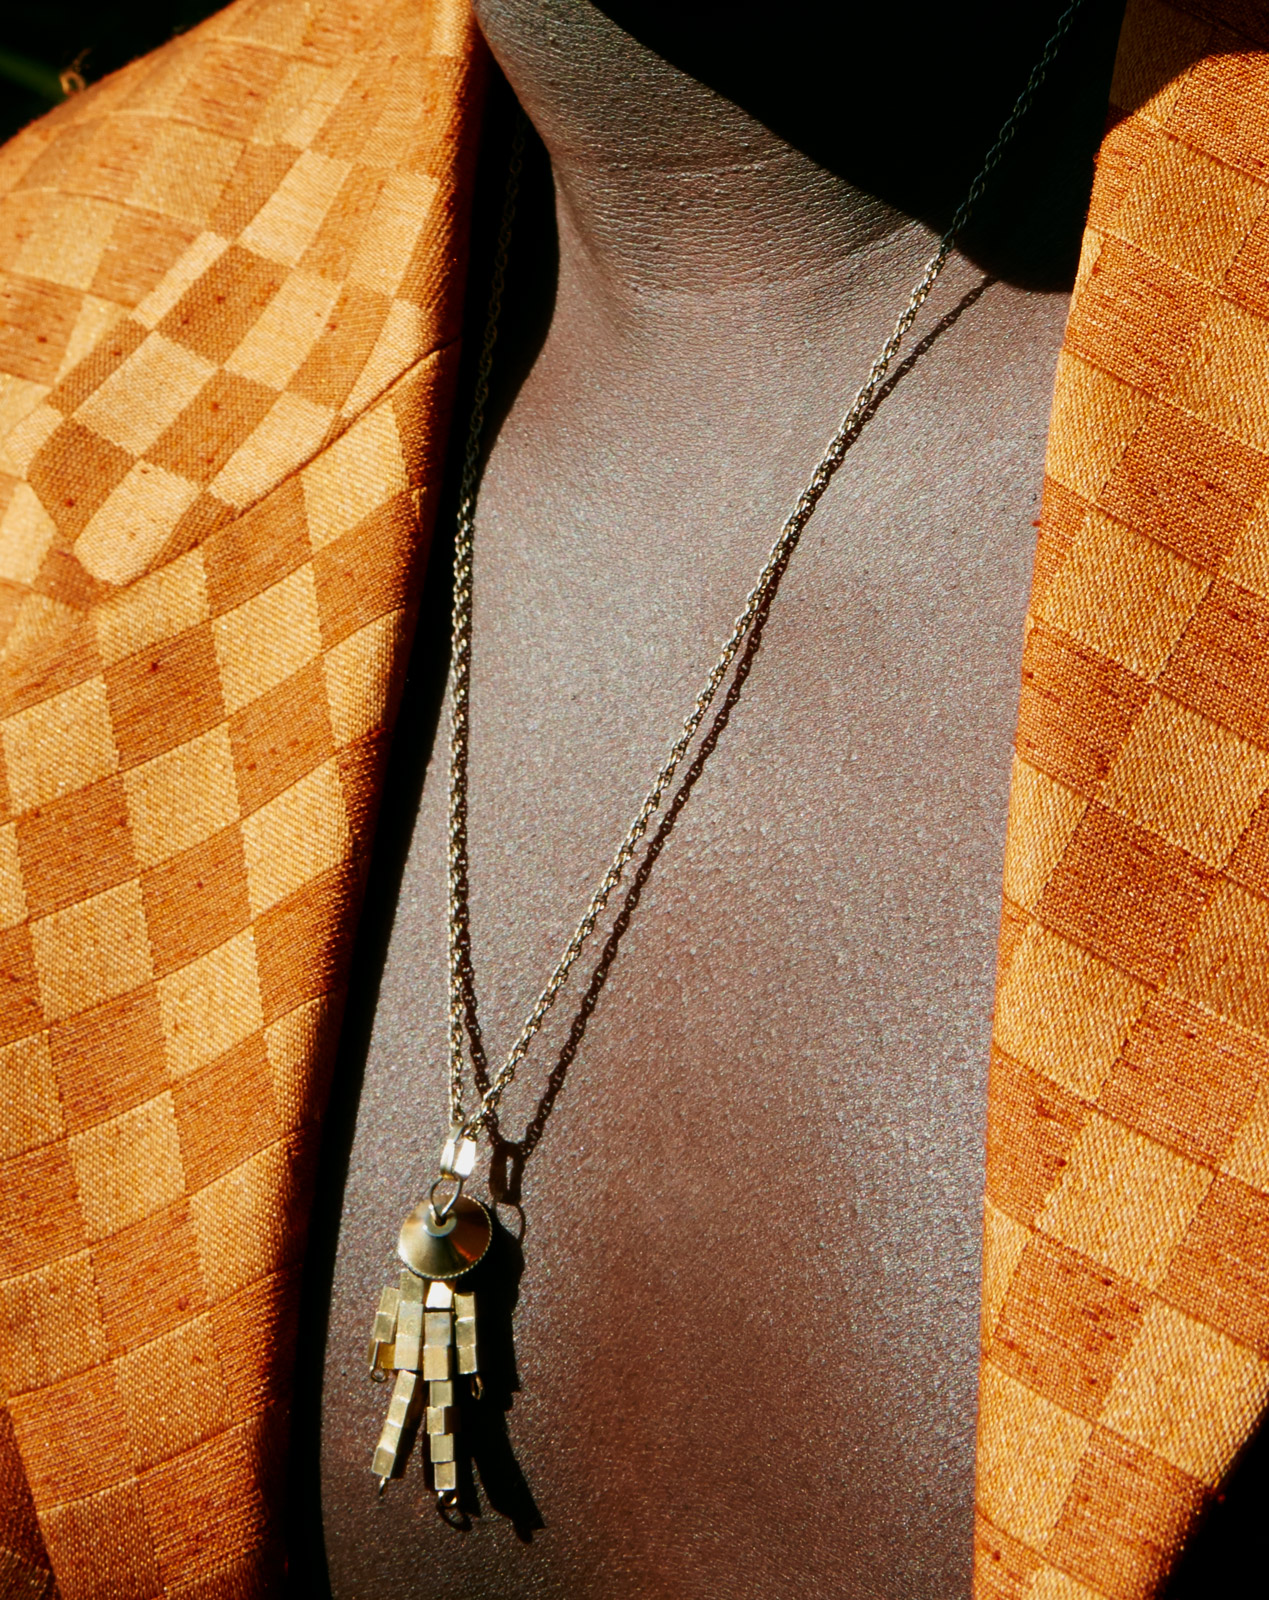 Biploar Sunshine, Musician close up detail of necklace.